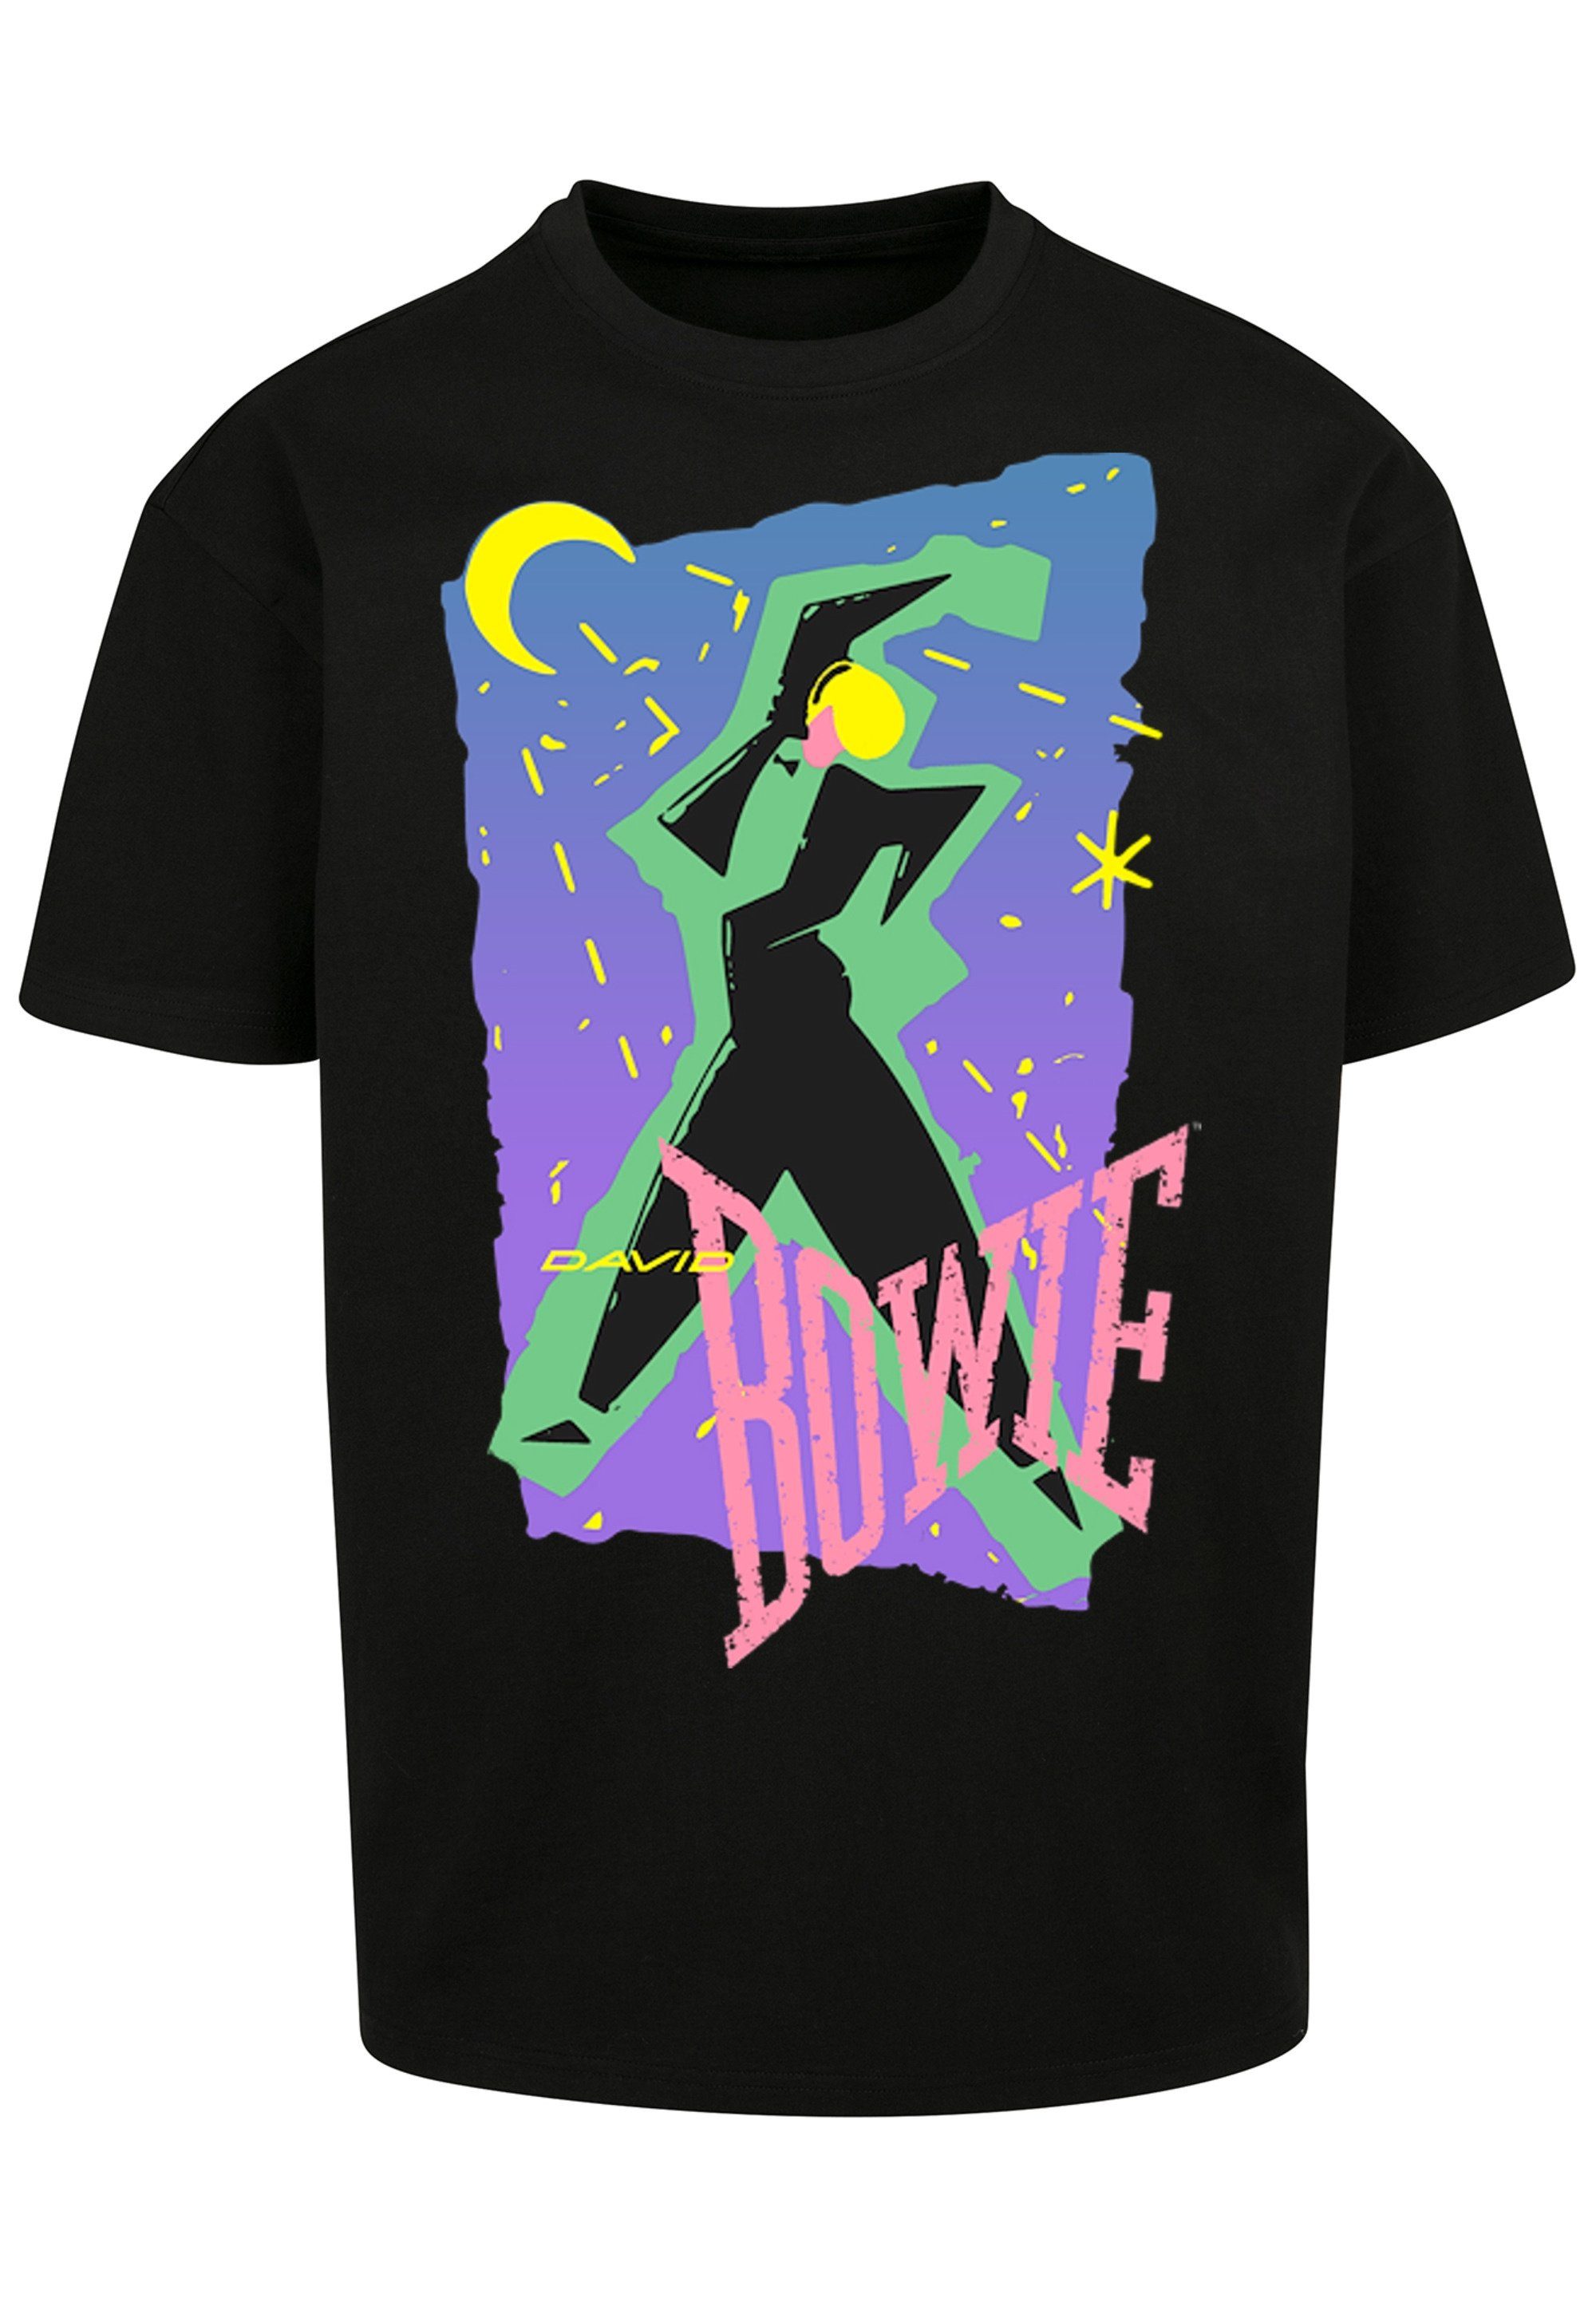 Dance schwarz Print Moonlight Bowie Music Band David T-Shirt Rock F4NT4STIC